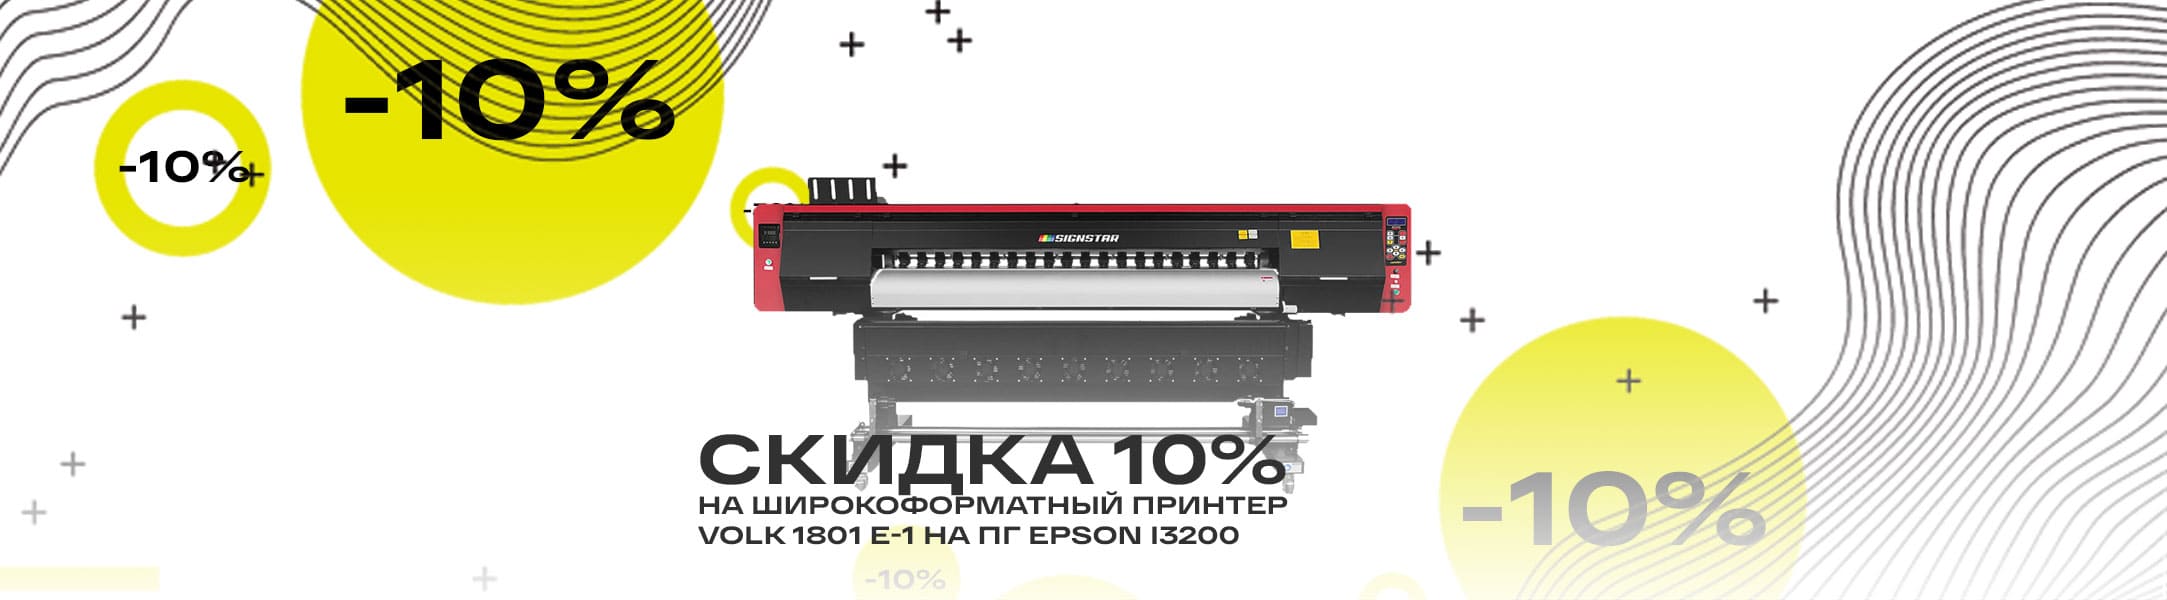 Уникальная скидка на принтер Volk 1801 E-1 на i3200